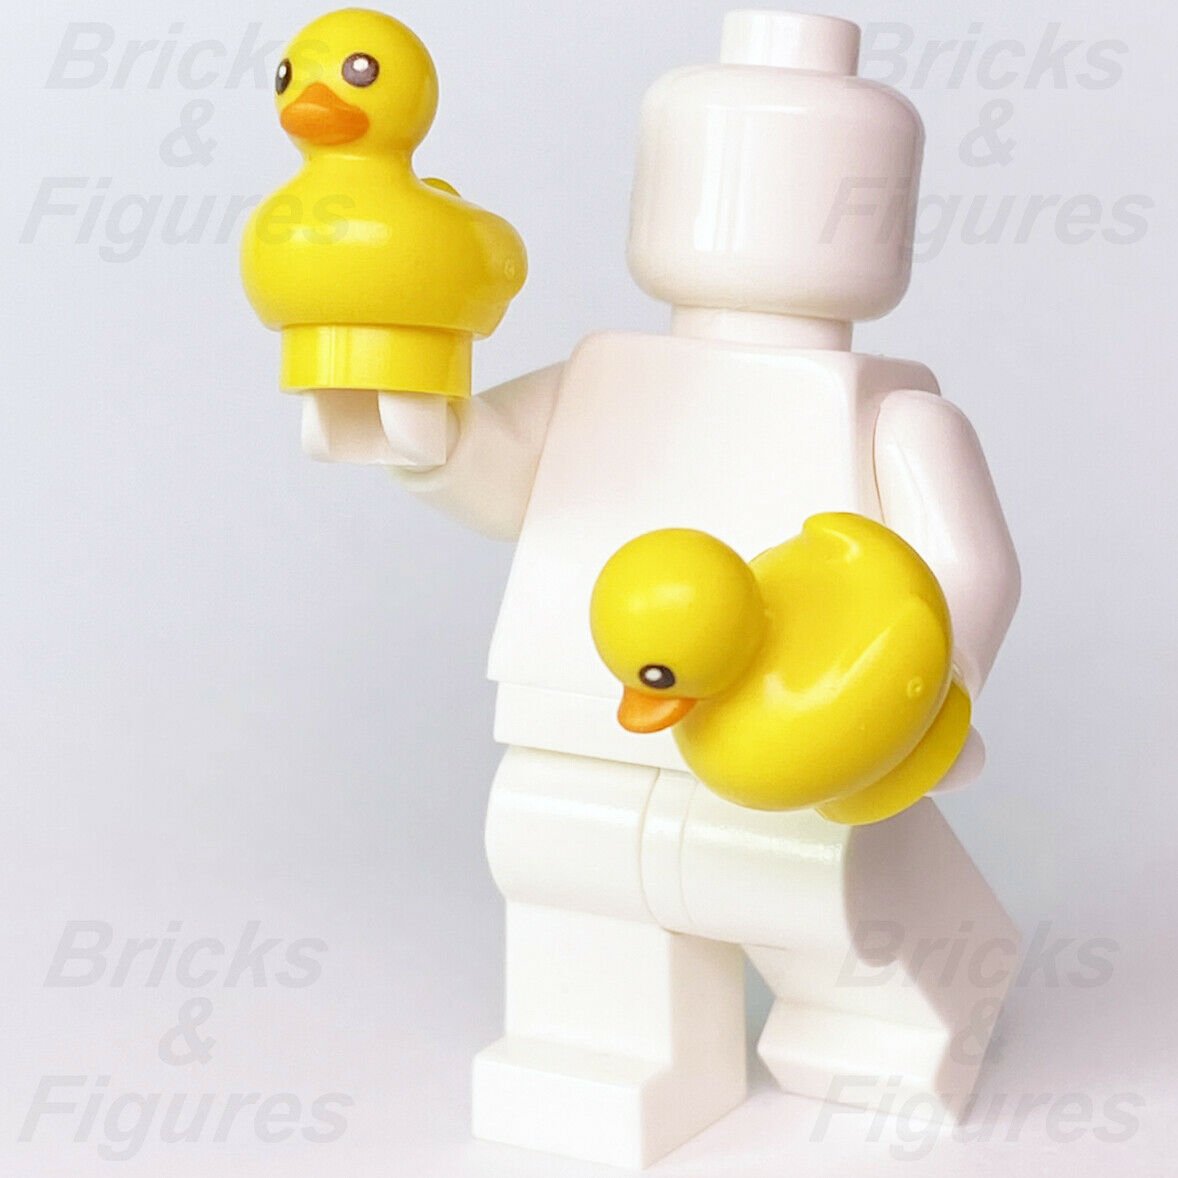 2 x Town City Ideas LEGO Yellow Ducklings Baby Ducks Animal 21324 60294 60234 - Bricks & Figures